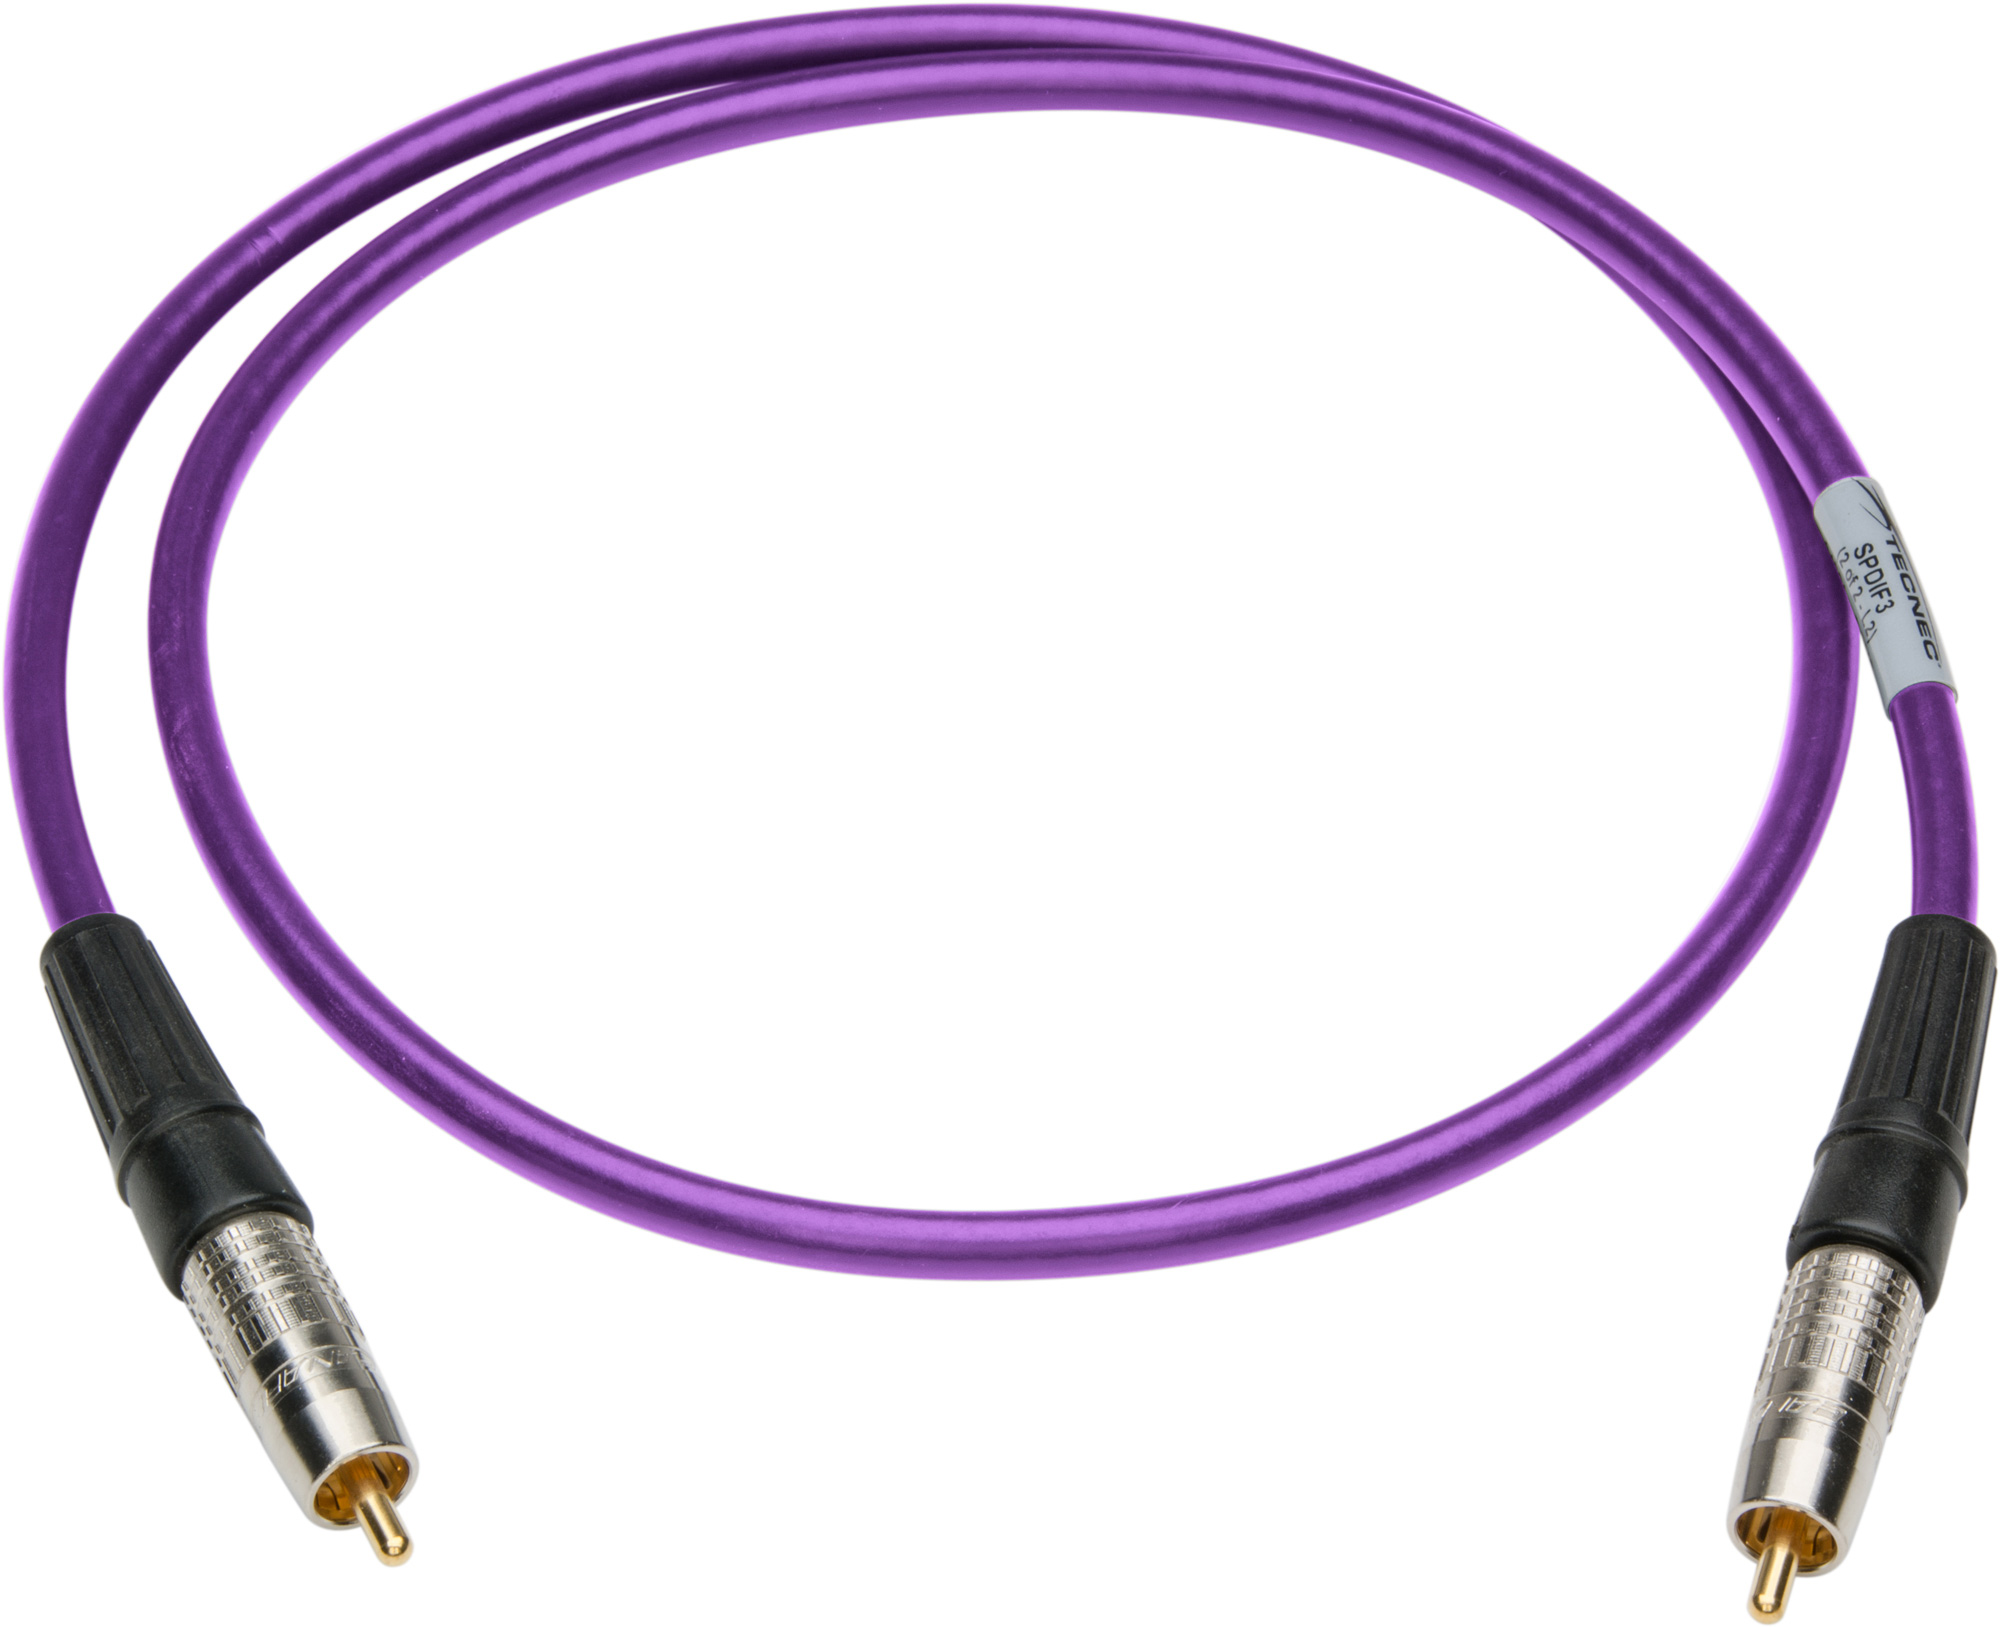 40 Foot SPDIF RCA Male to Male Digital Audio Cable - PURPLE SPDIF40PE